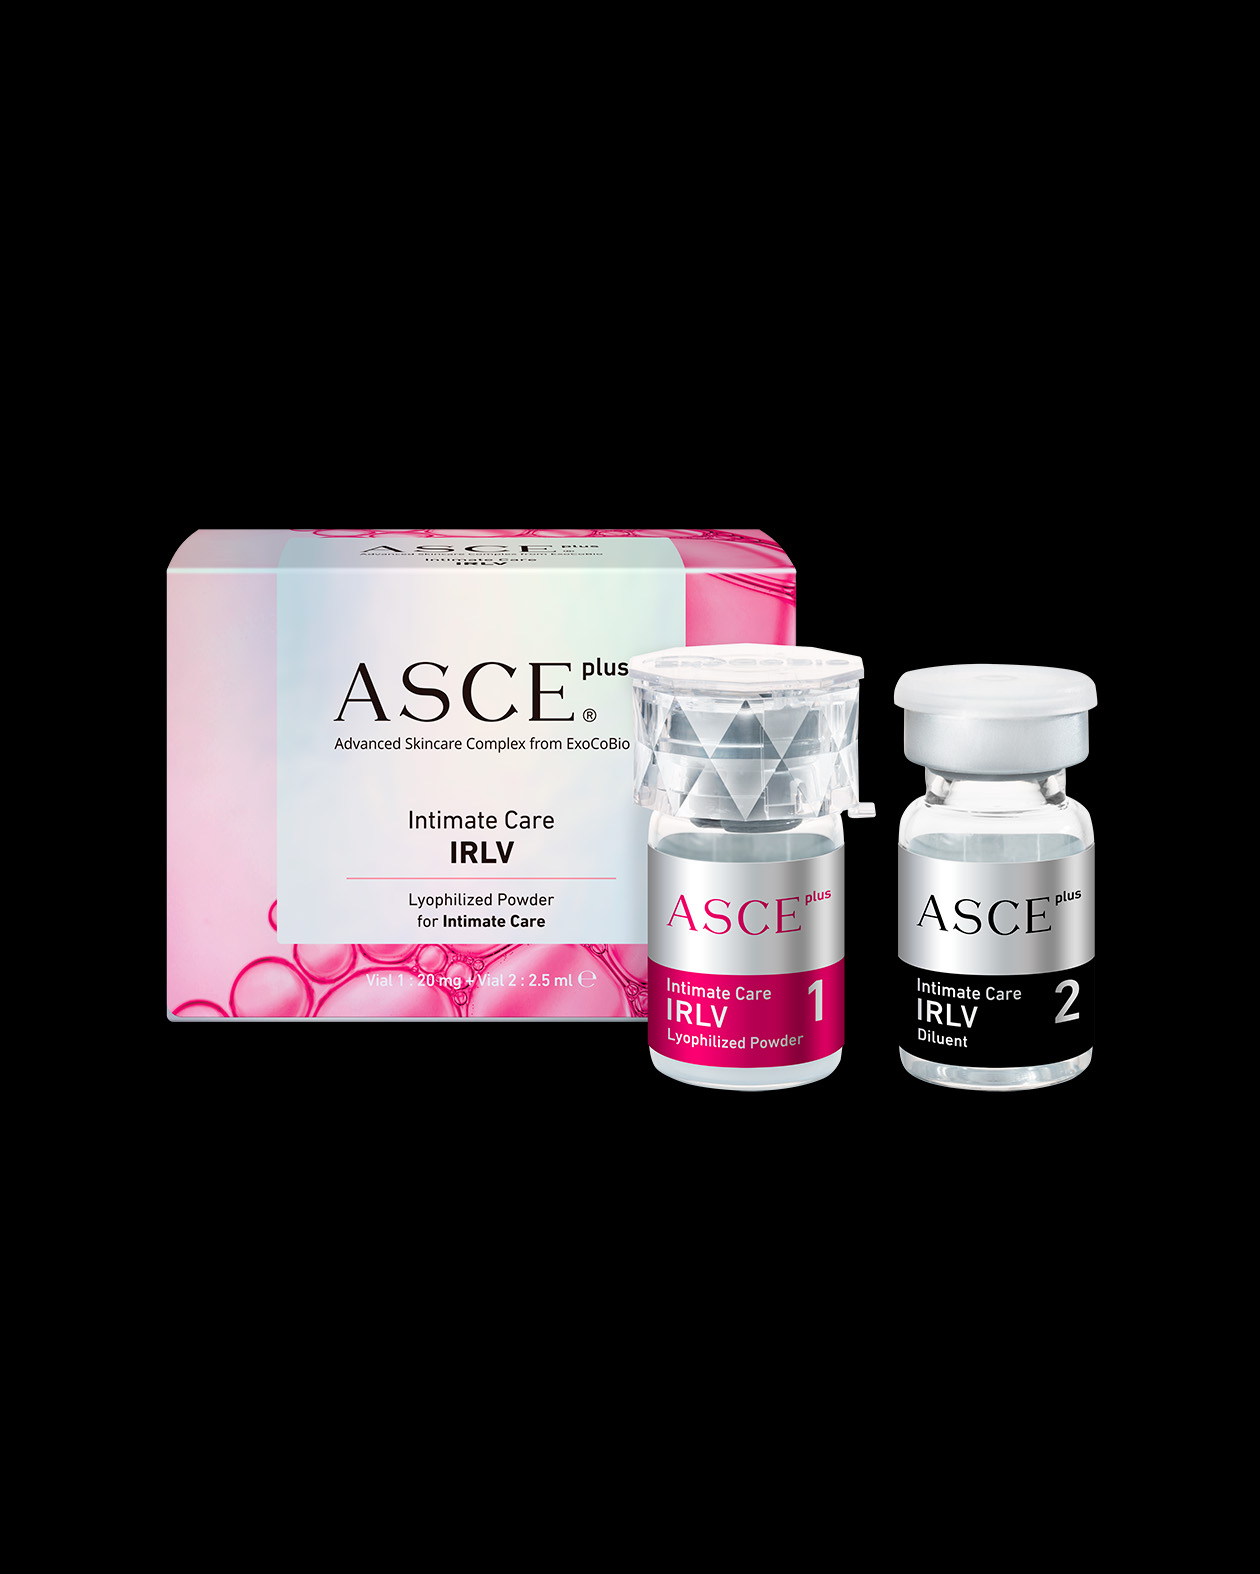 comprar exosomas asceplus irlv vaginal ginecologia exocobio distribuidores belium medical salud vaginal